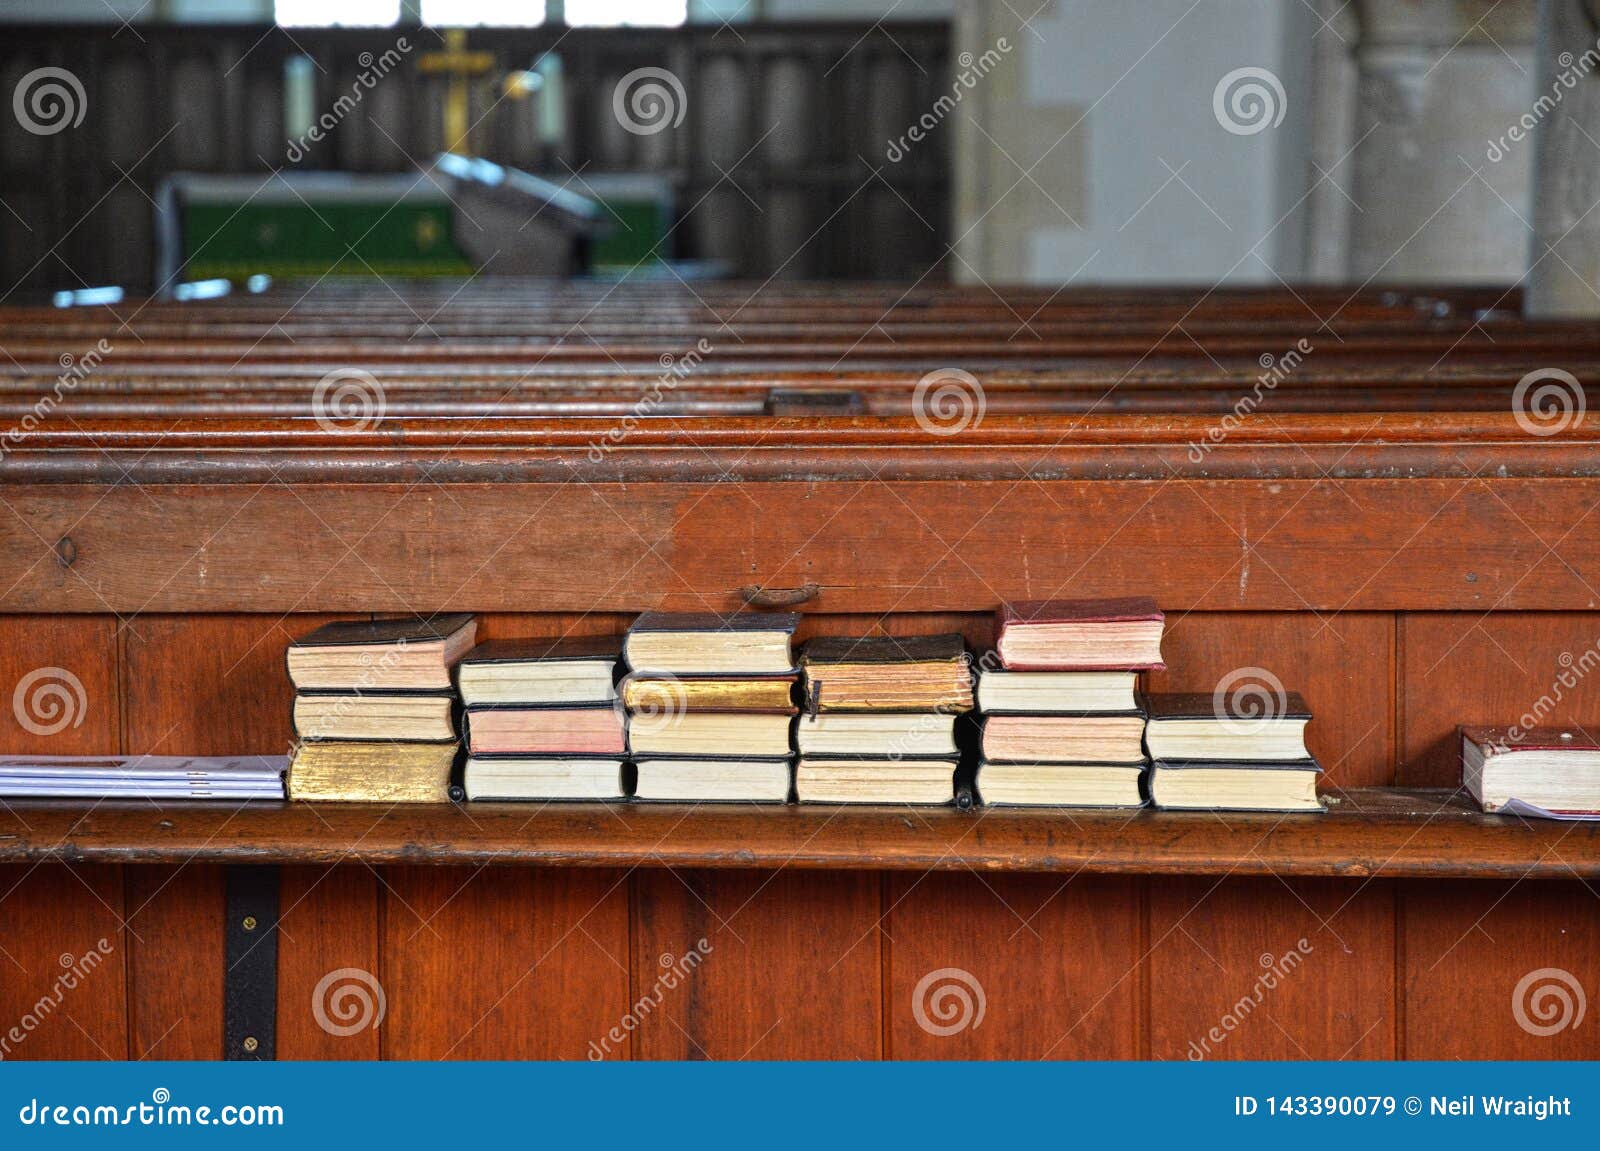 spiritually uplifting hymn books stacked on church bench